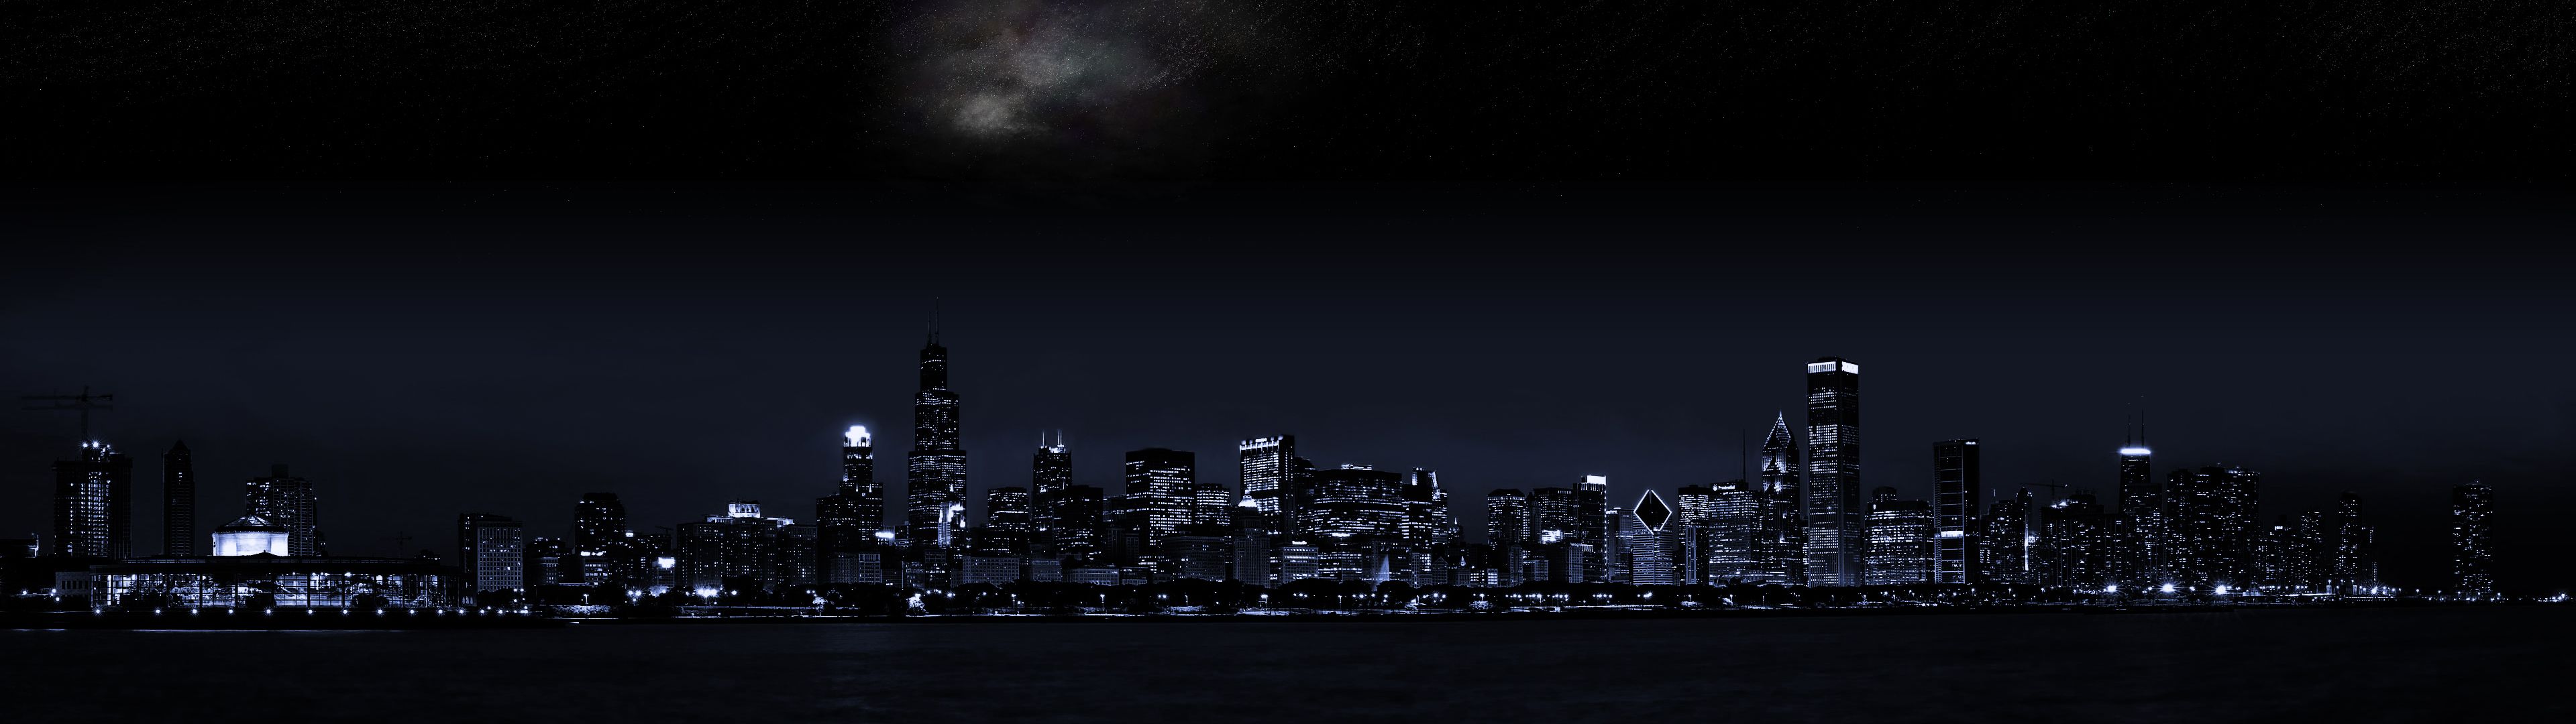 Cityscape At Night Dual Screen Wallpaper | 3840x1080 | ID:45891